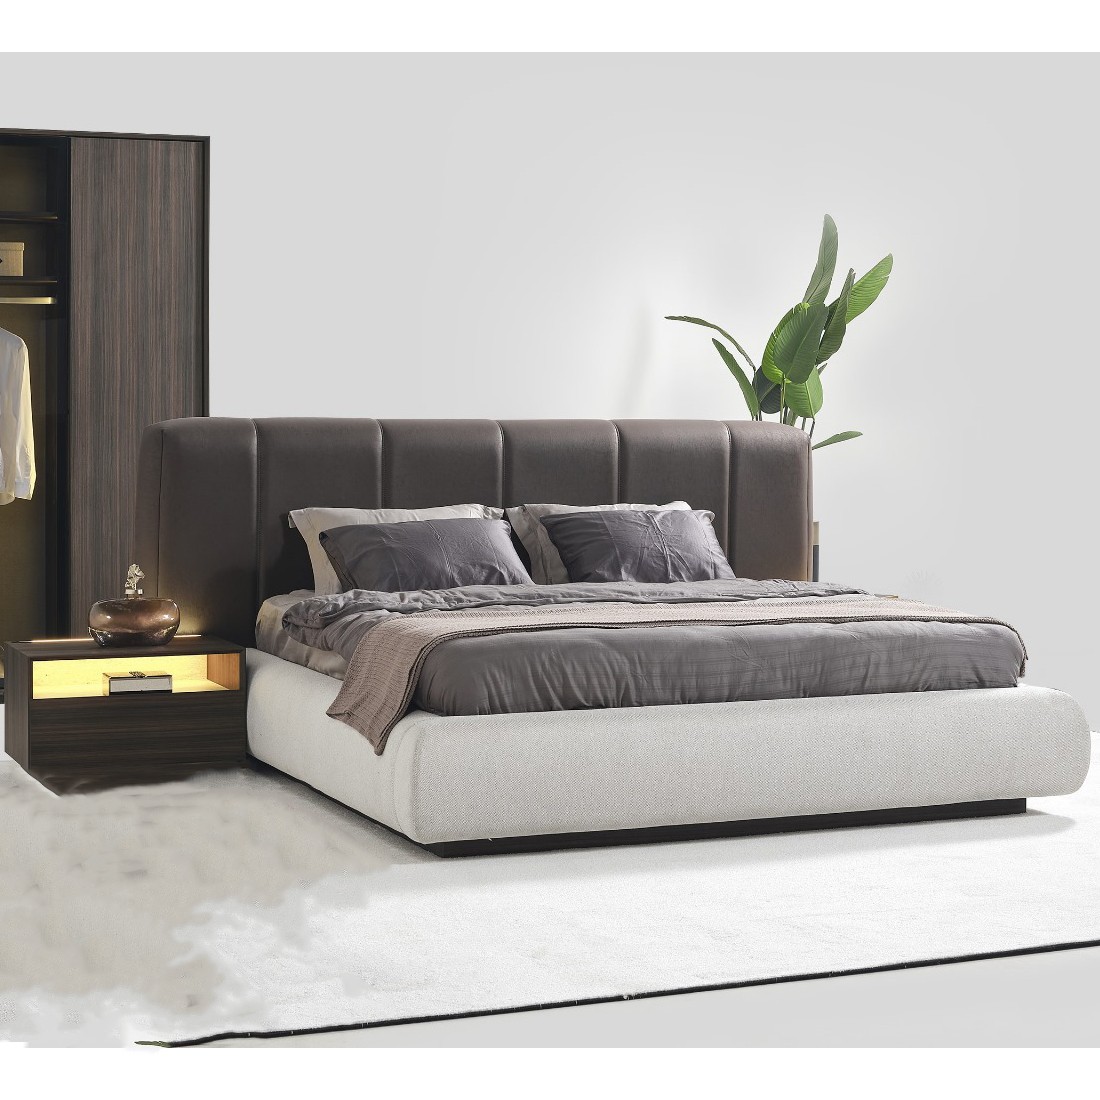 Aqua Bed With Storage 180x200 cm